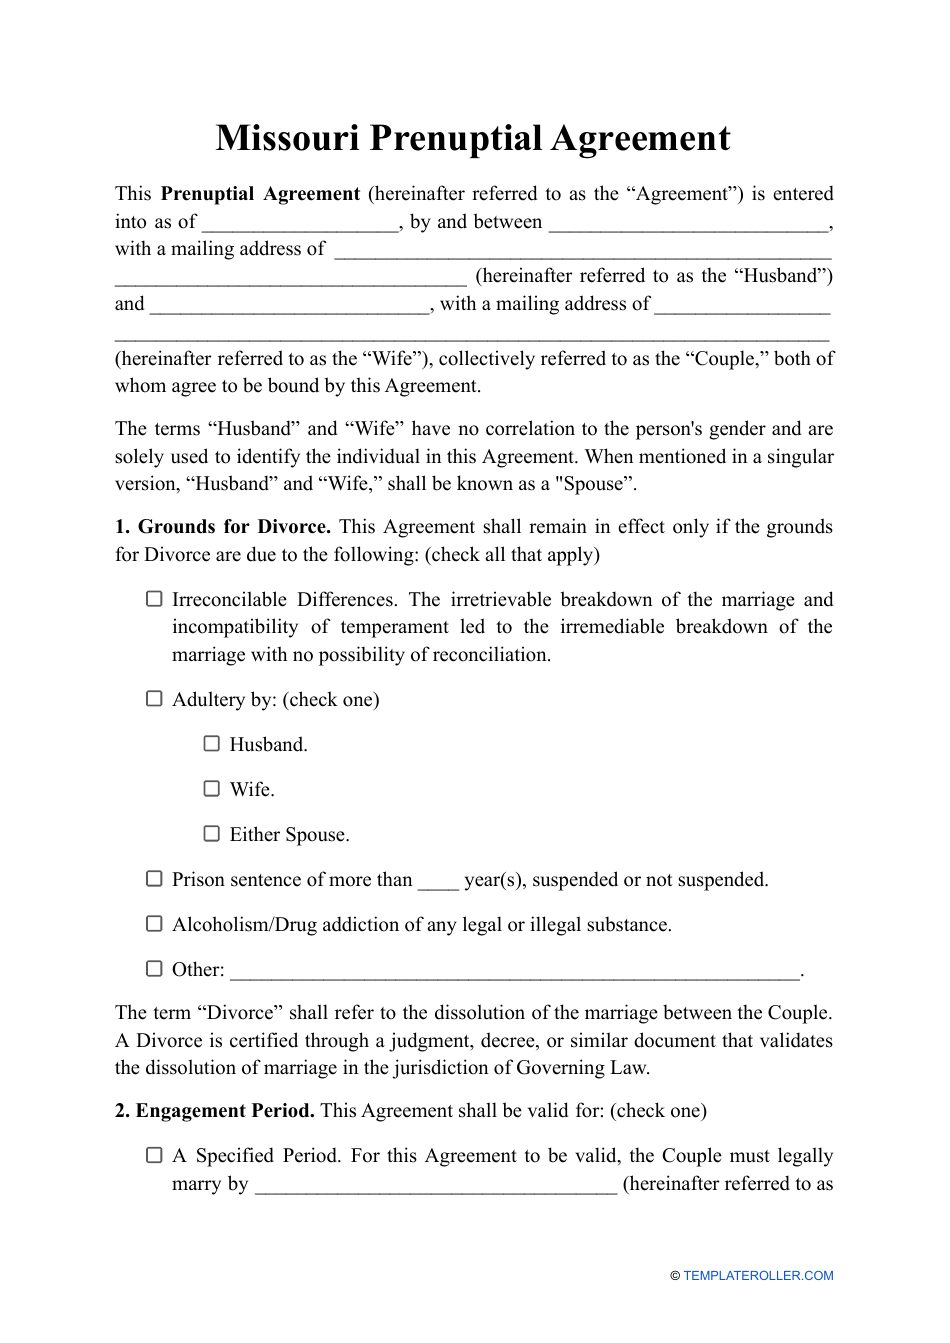 Prenuptial Agreement Template - Missouri, Page 1